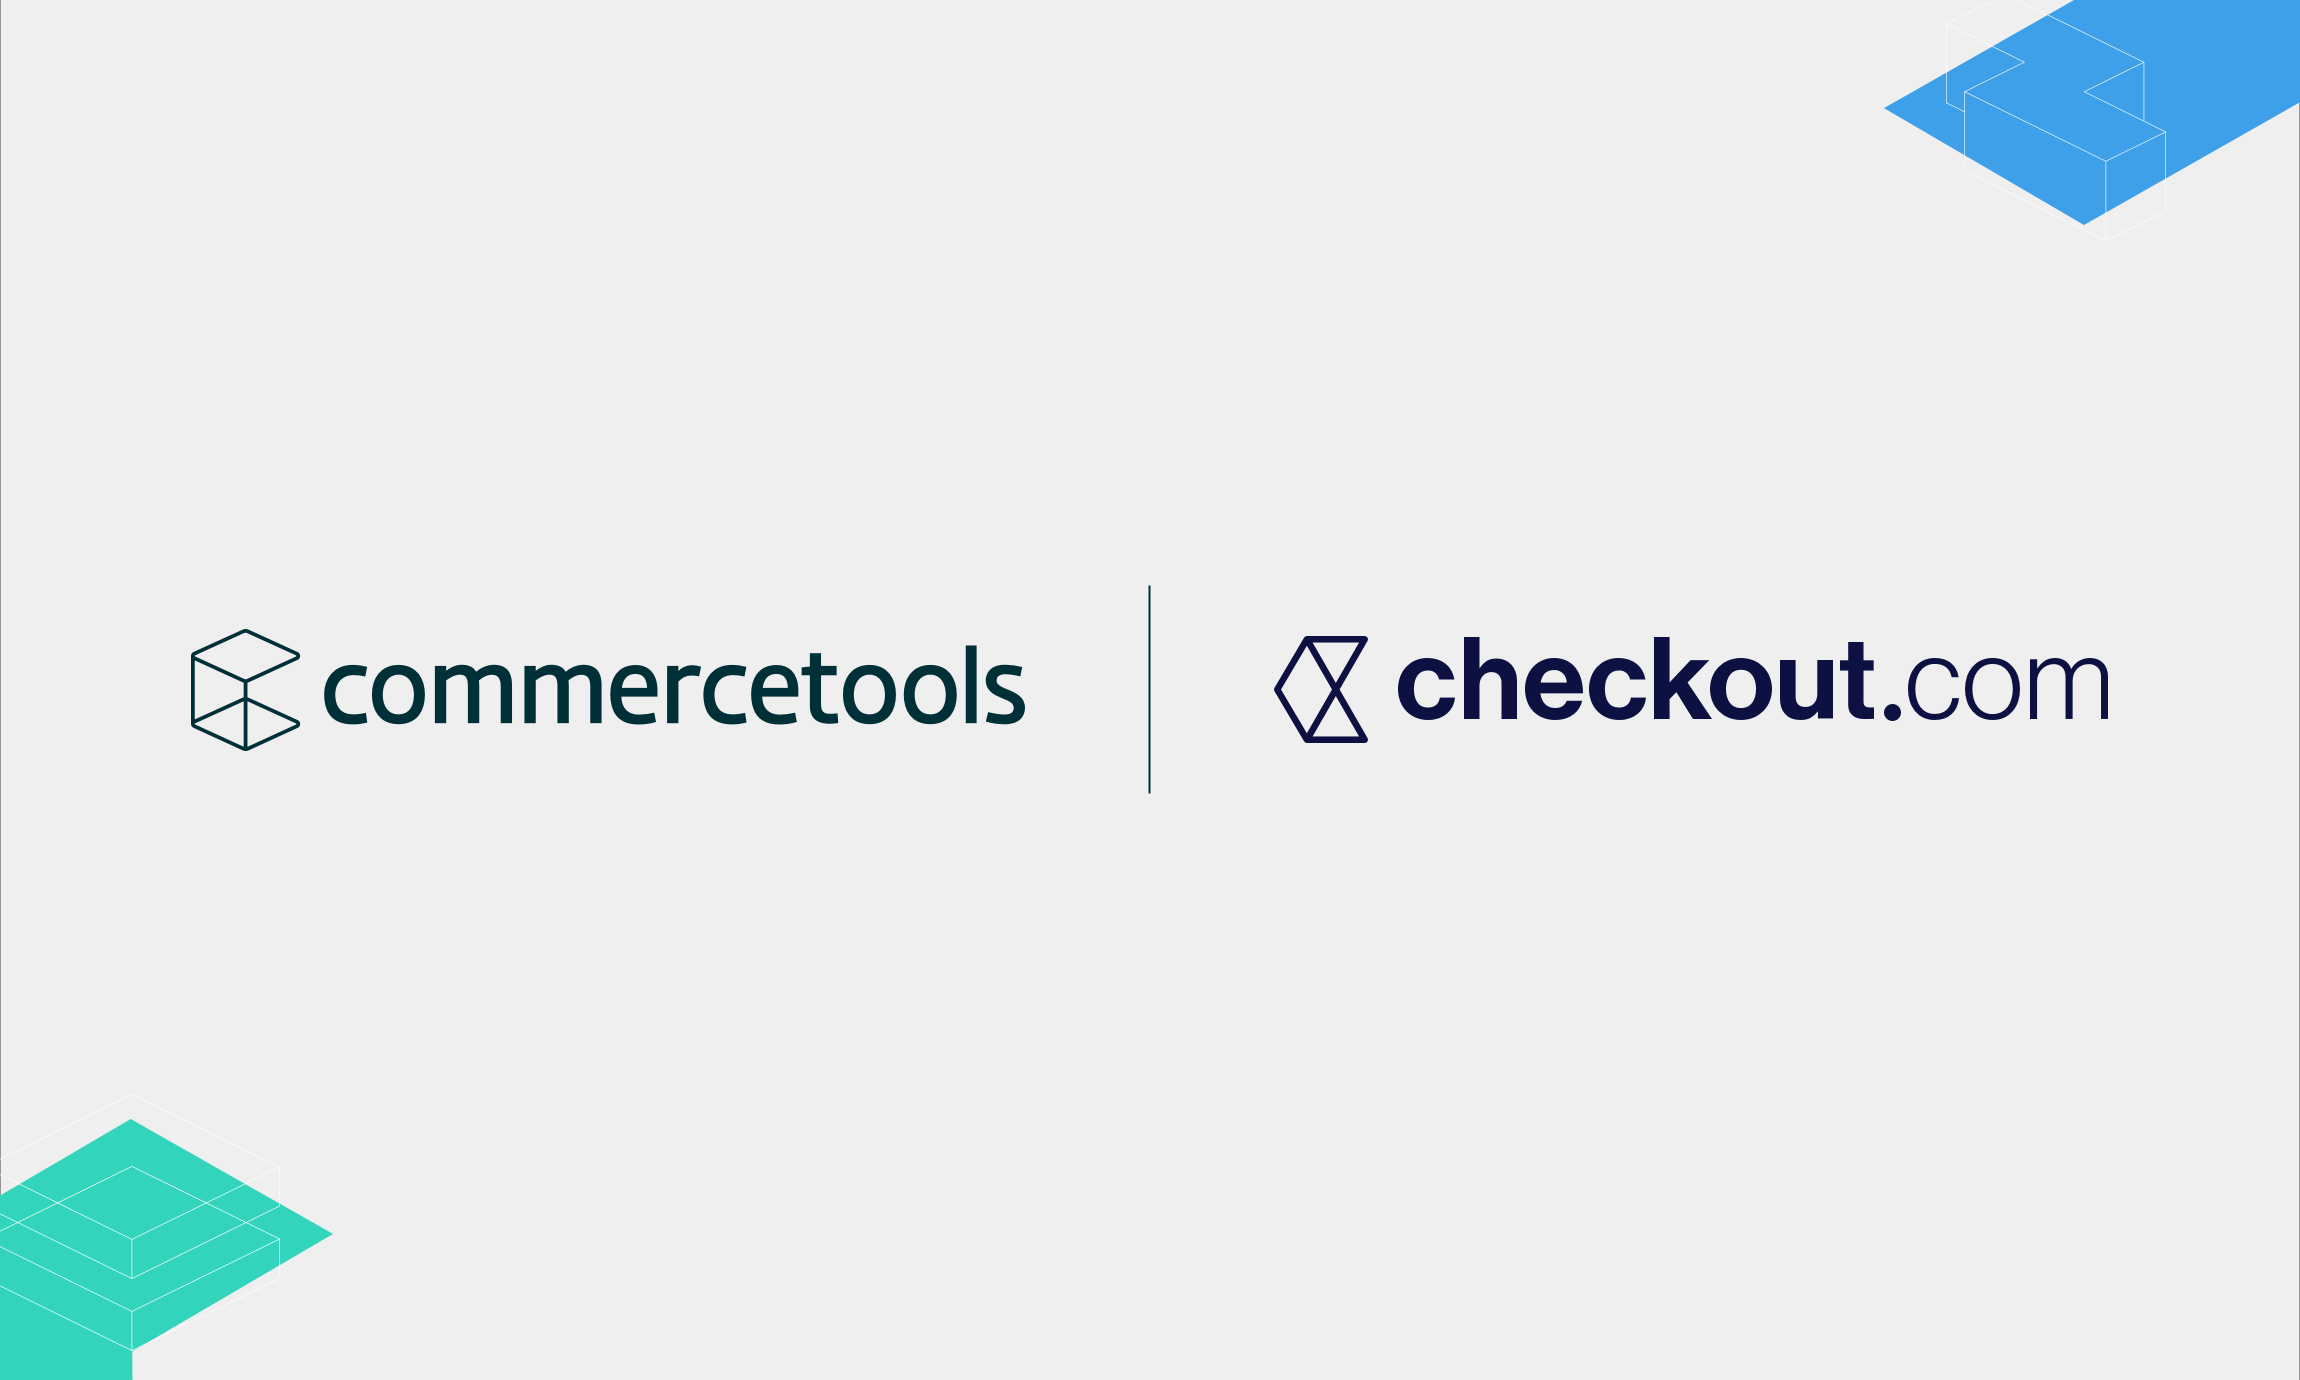 Checkout.com partners with eCommerce platform commercetools